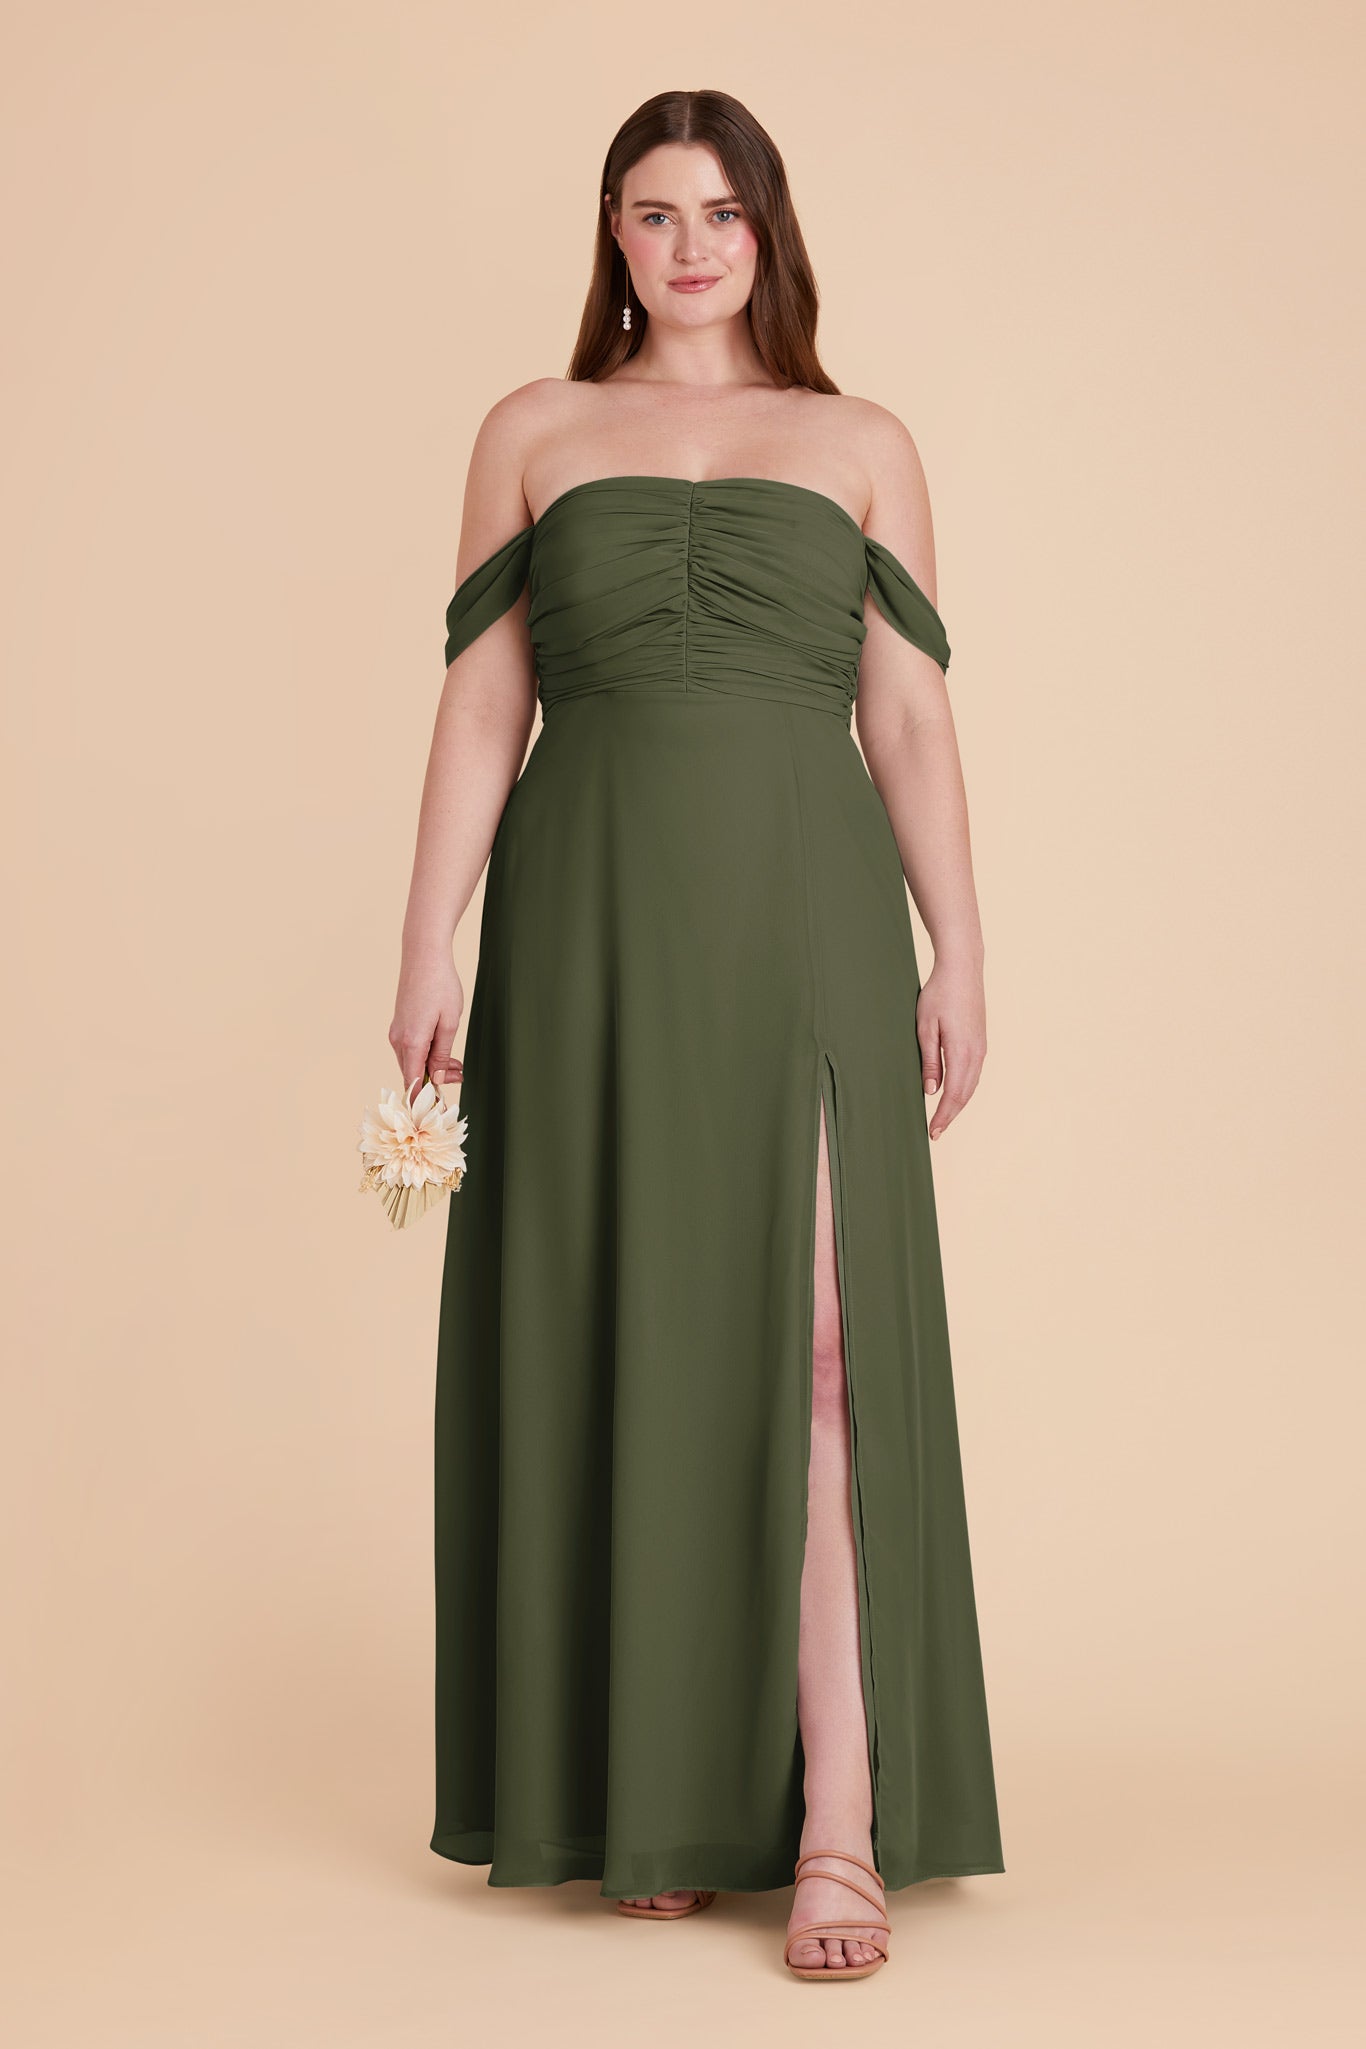 Olive Cara Chiffon Dress by Birdy Grey